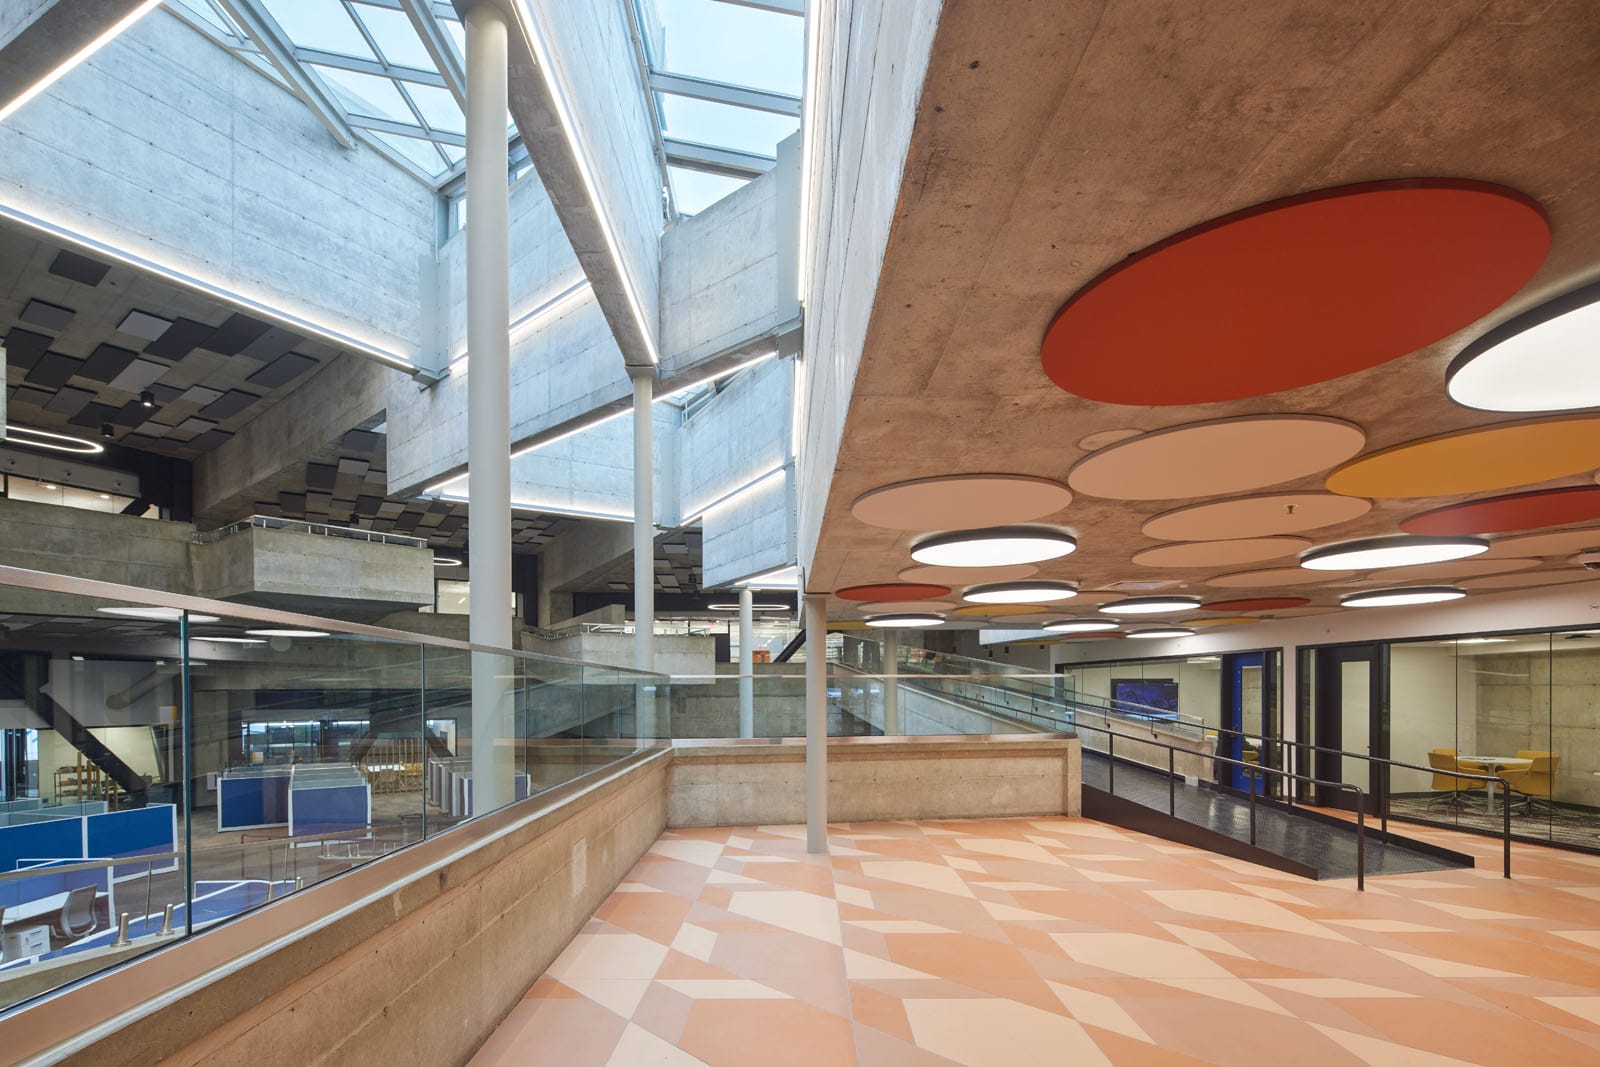 Photo of the Bakar Labs lobby, skylight, and part of the main office floor